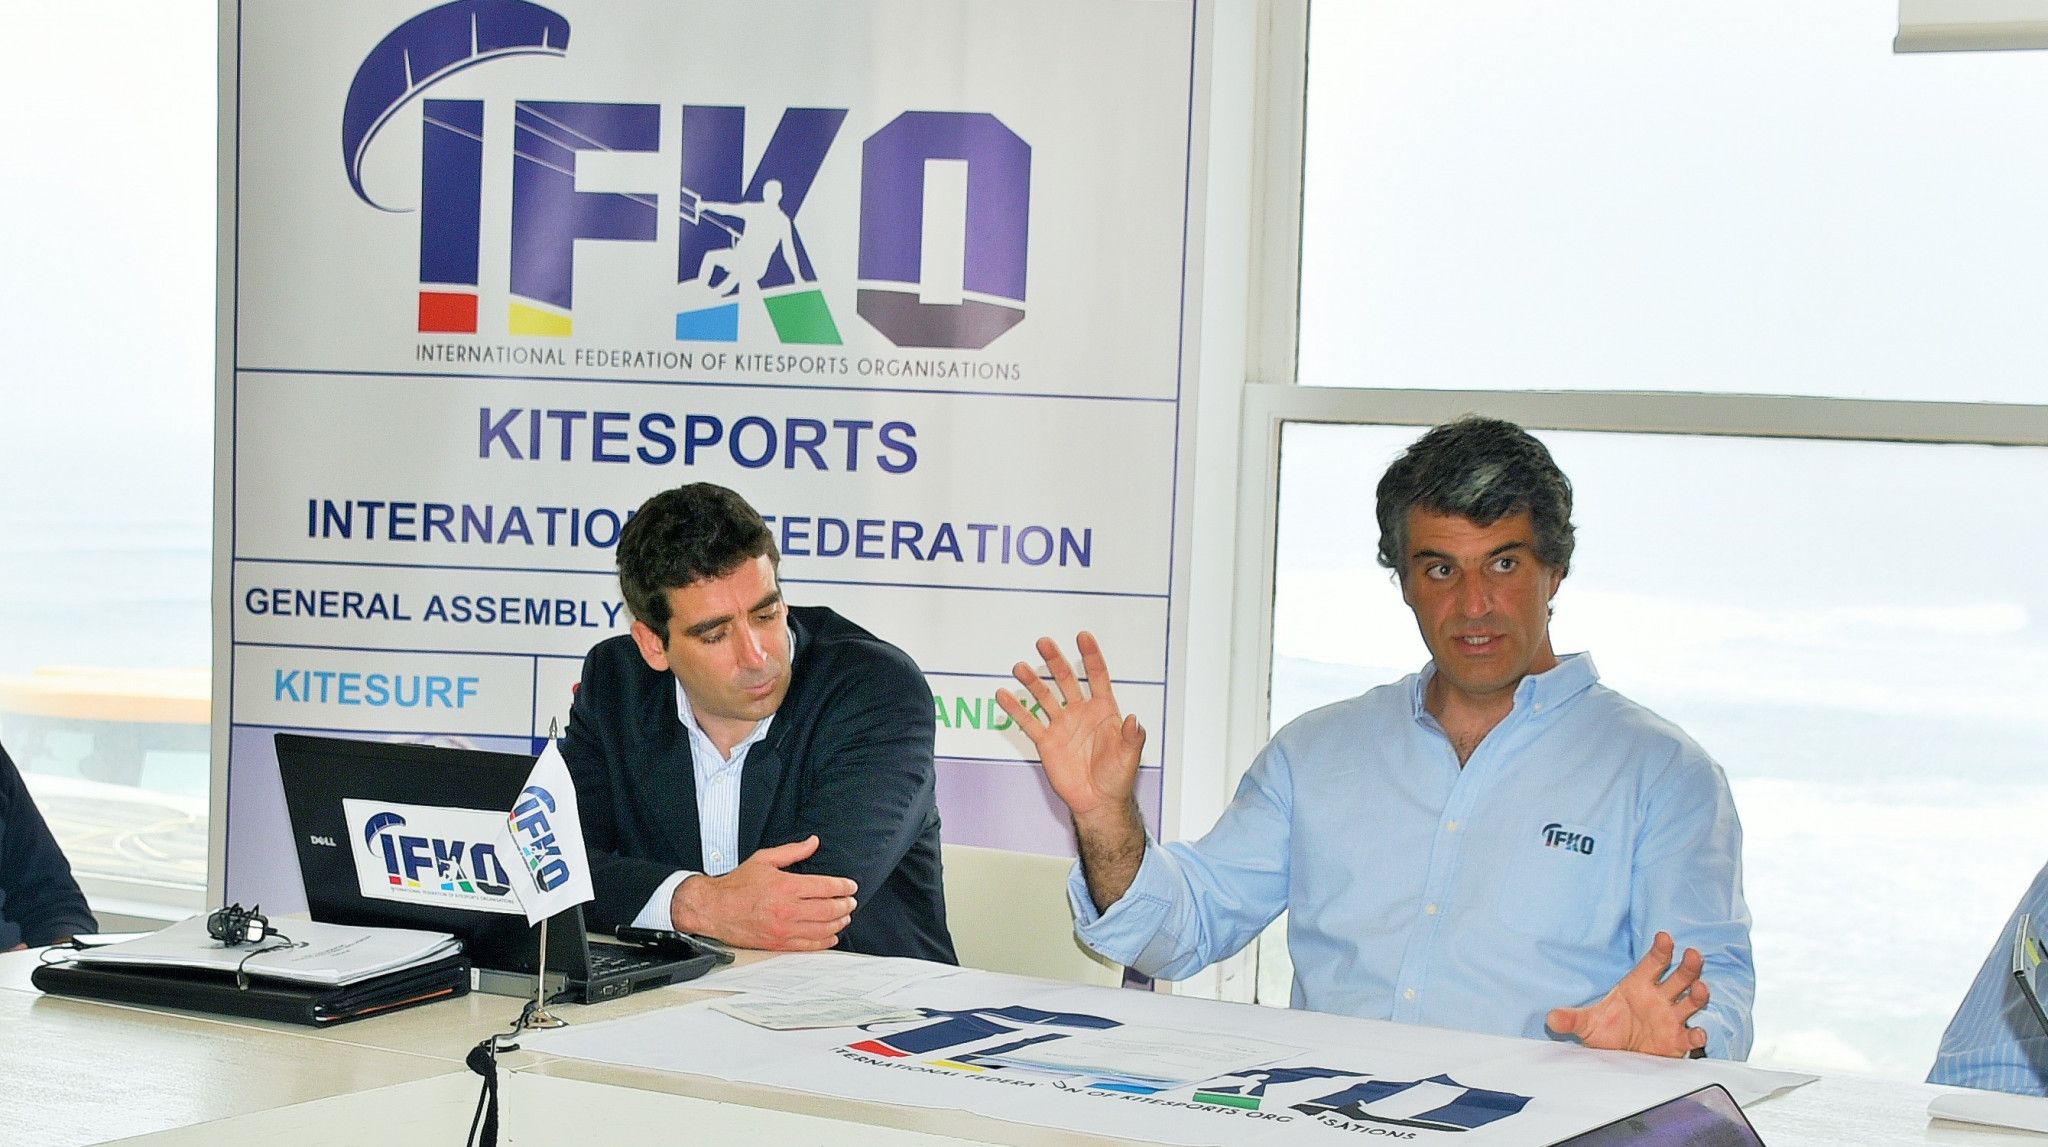 International Federation of Kitesports Organisations claim World Sailing abusing position